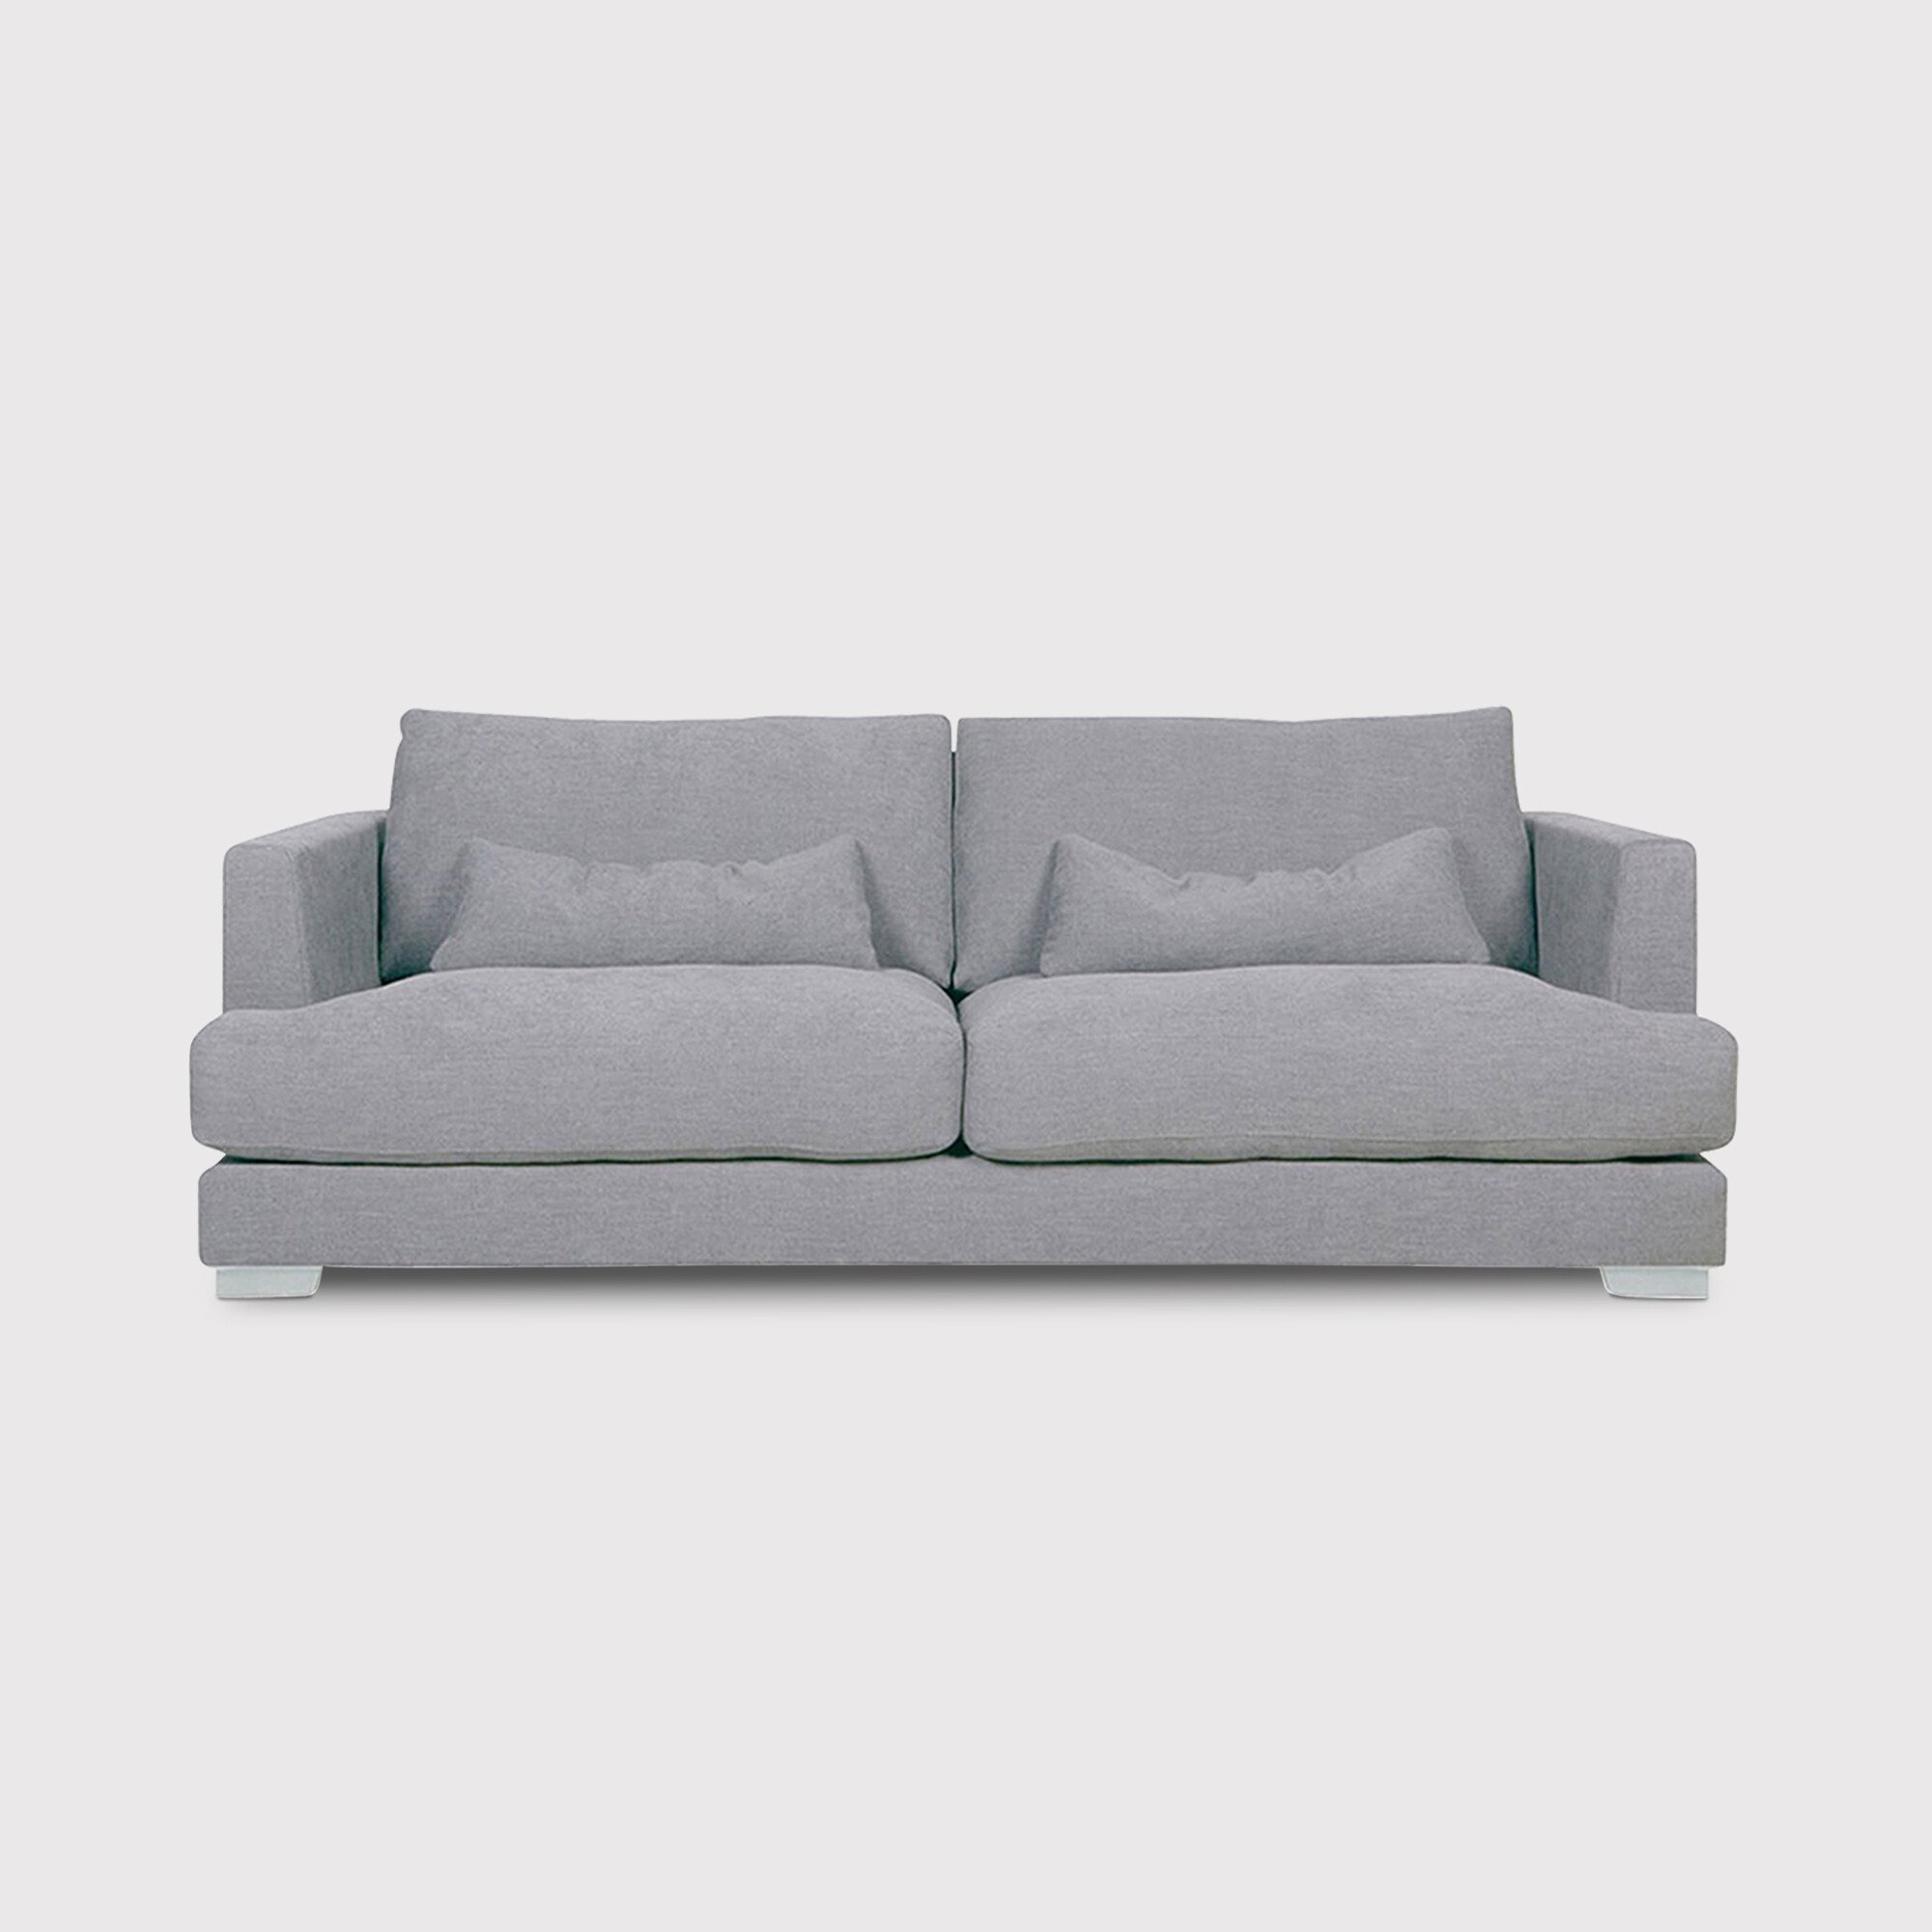 Flavin 2 Seater Sofa, Grey Fabric | Barker & Stonehouse